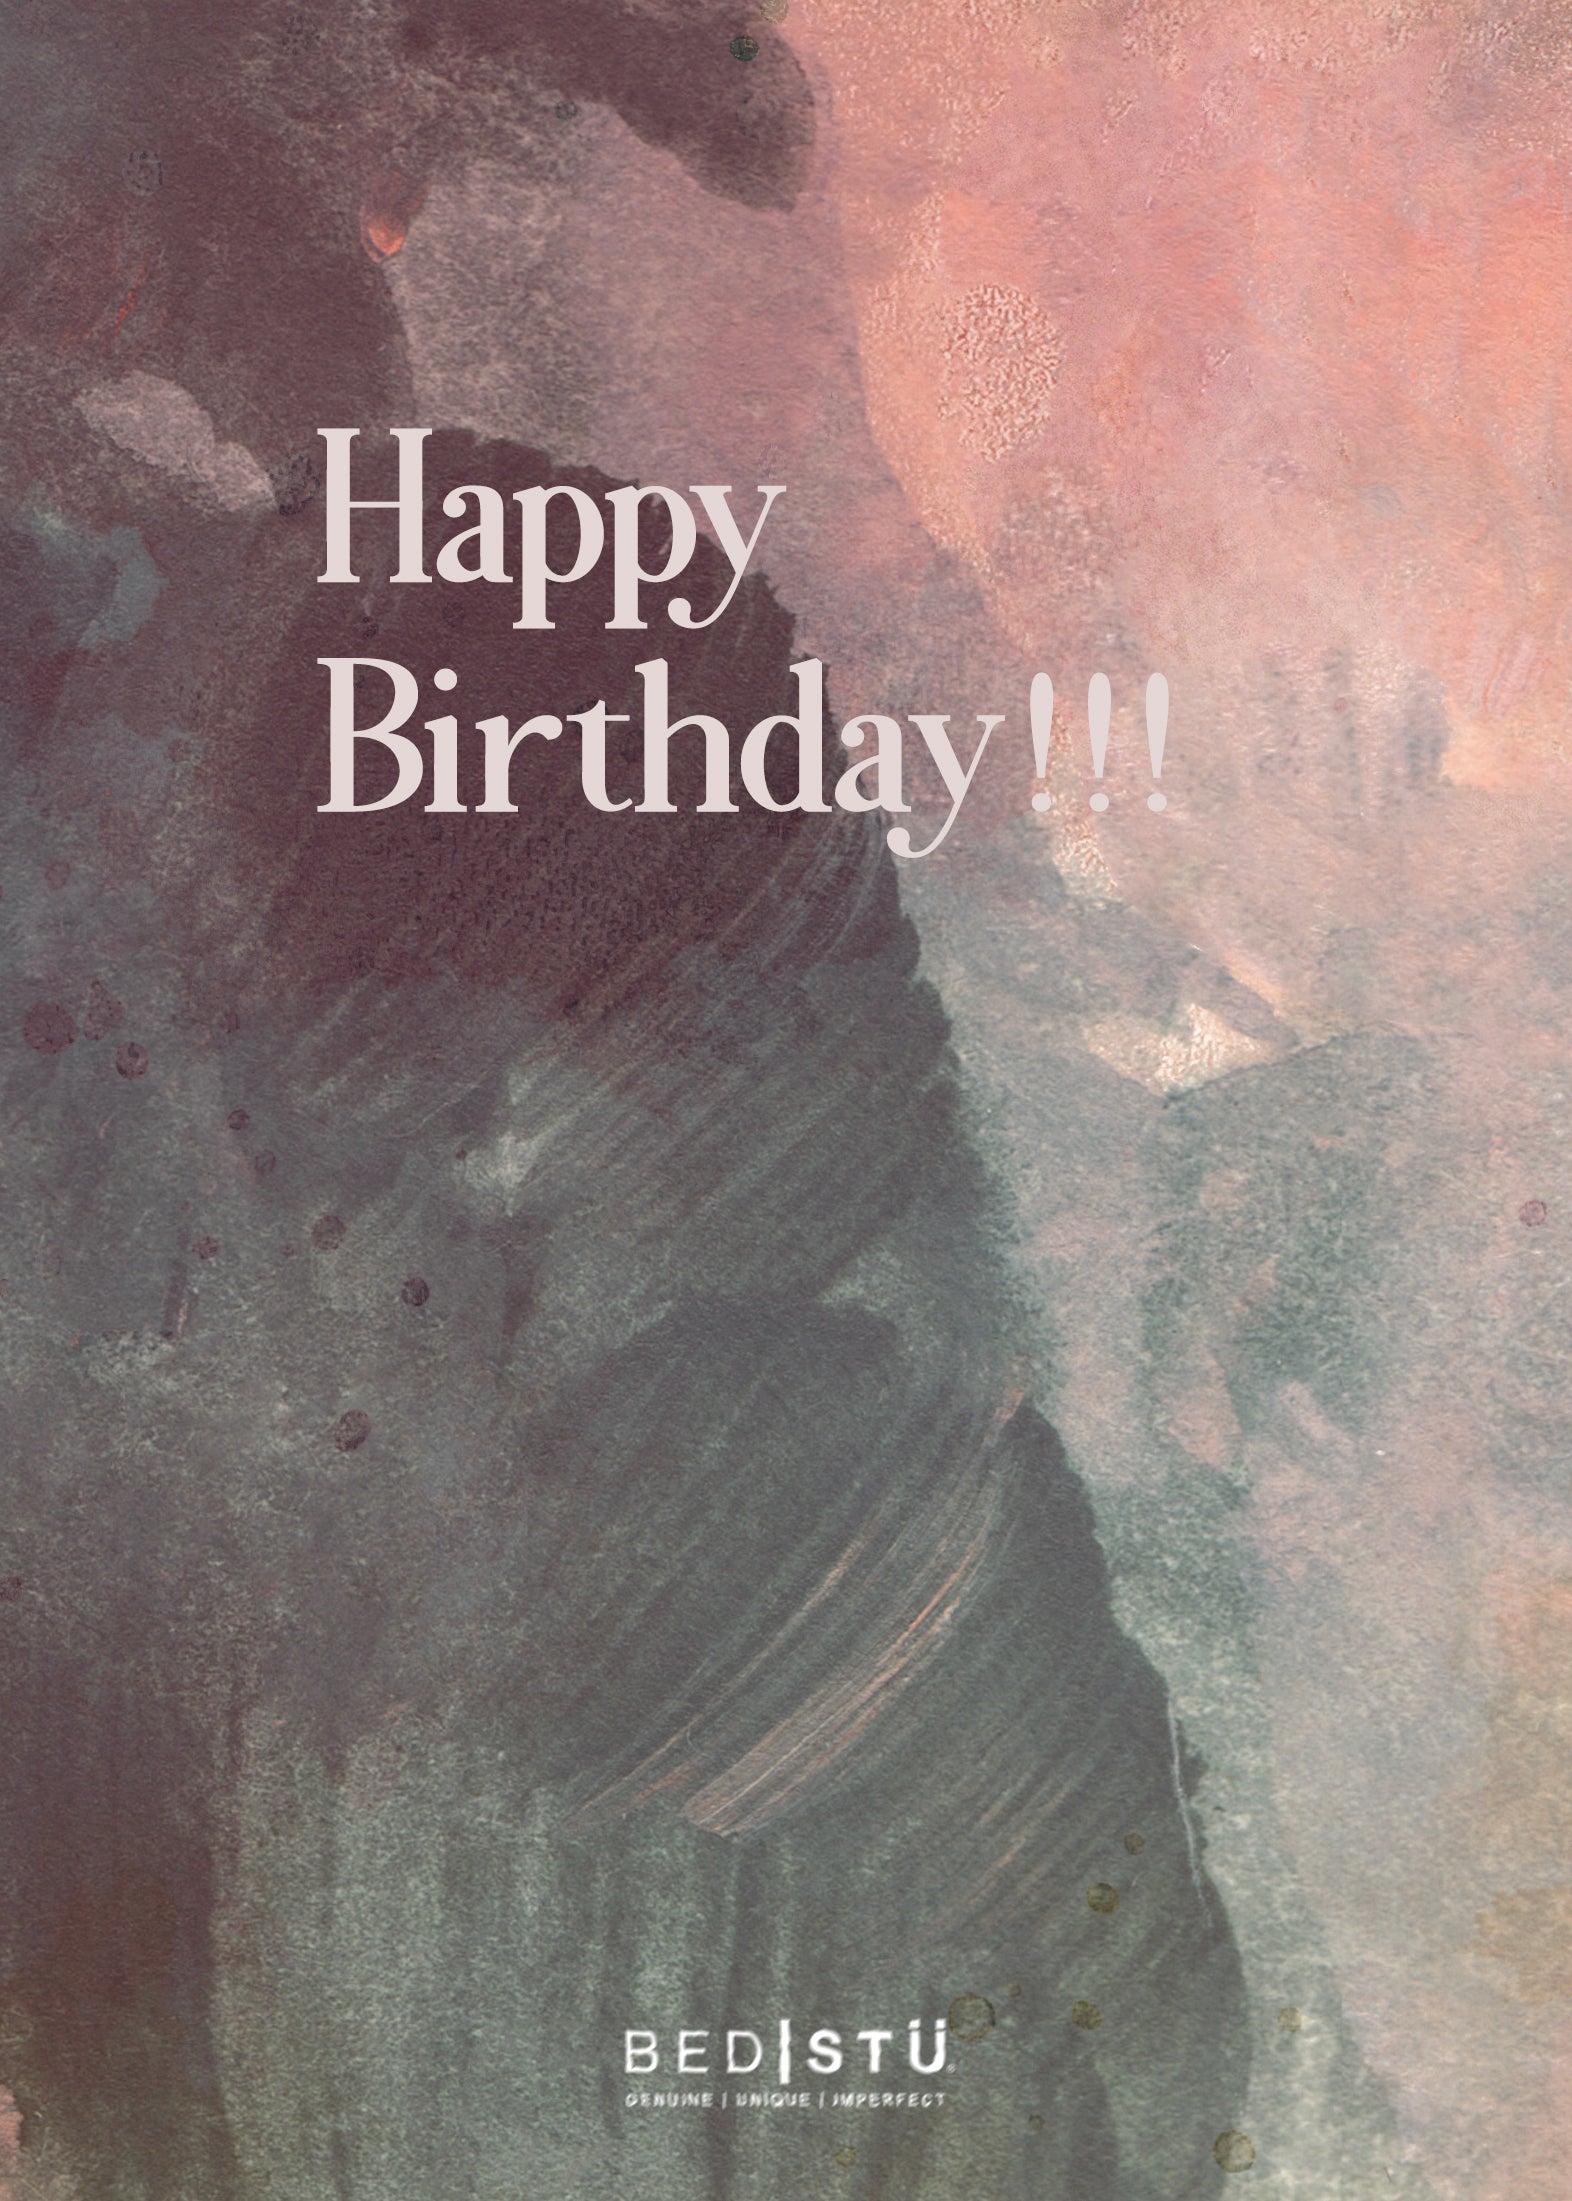 An online Bed|Stü Happy Birthday card.